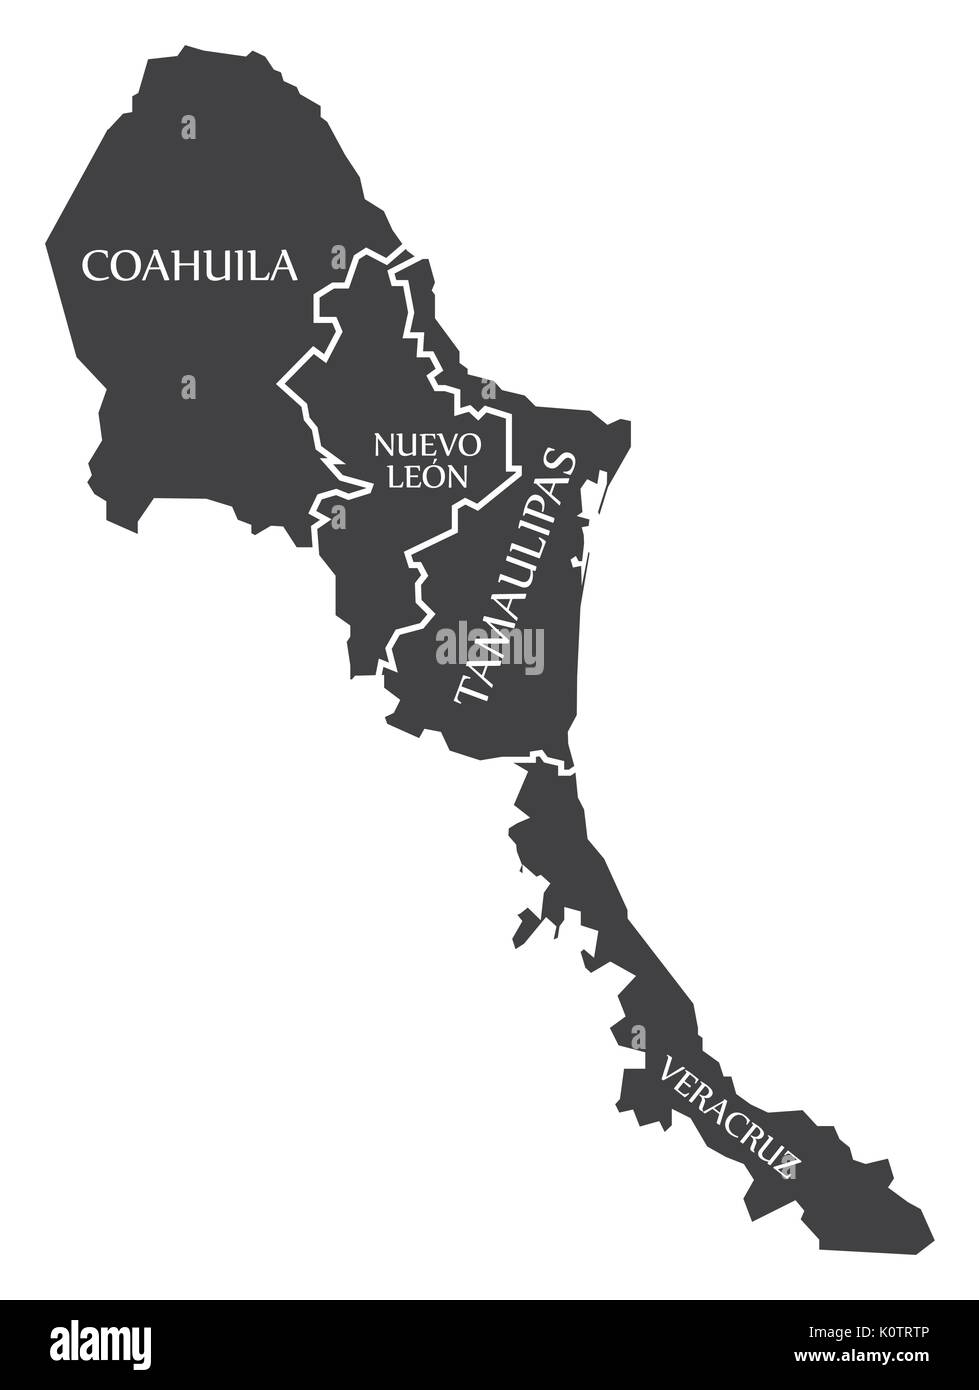 Coahuila - Nuevo Leon - Tamaulipas - Veracruz Map Mexico illustration Stock Vector